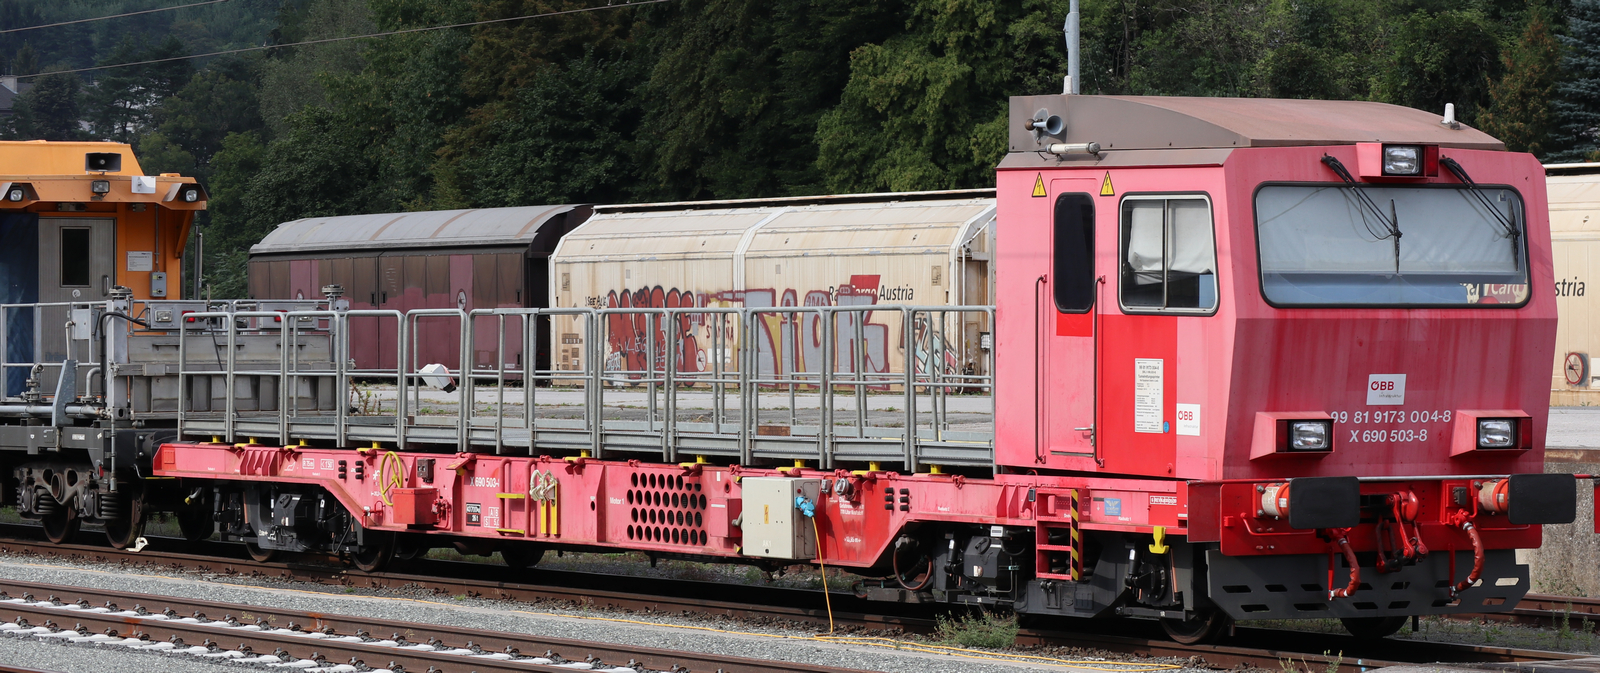 Windhoff-CargoSprinter (series 690) as an ÖBB tunnel rescue train in August 2020 in Spittal-Millstättersee